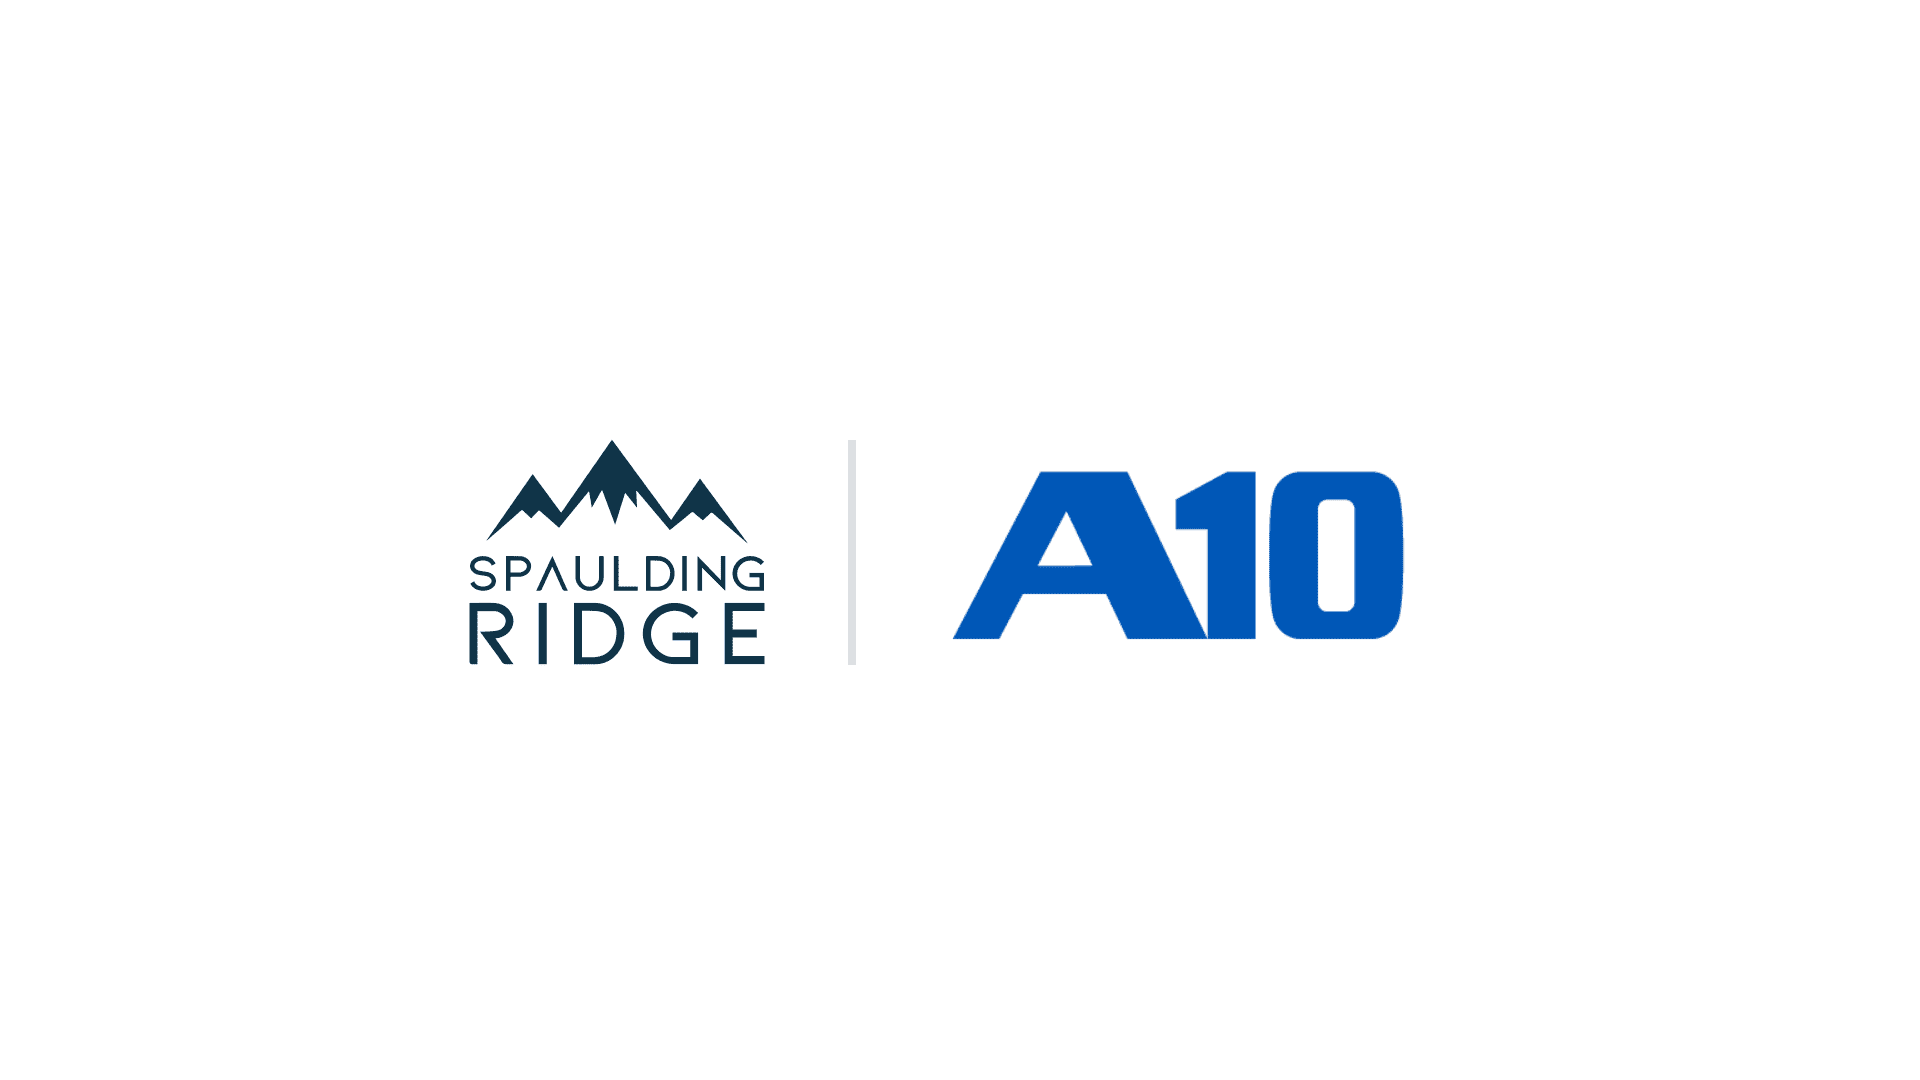 A10 Networks’ Digital Transformation Journey + Spaulding Ridge